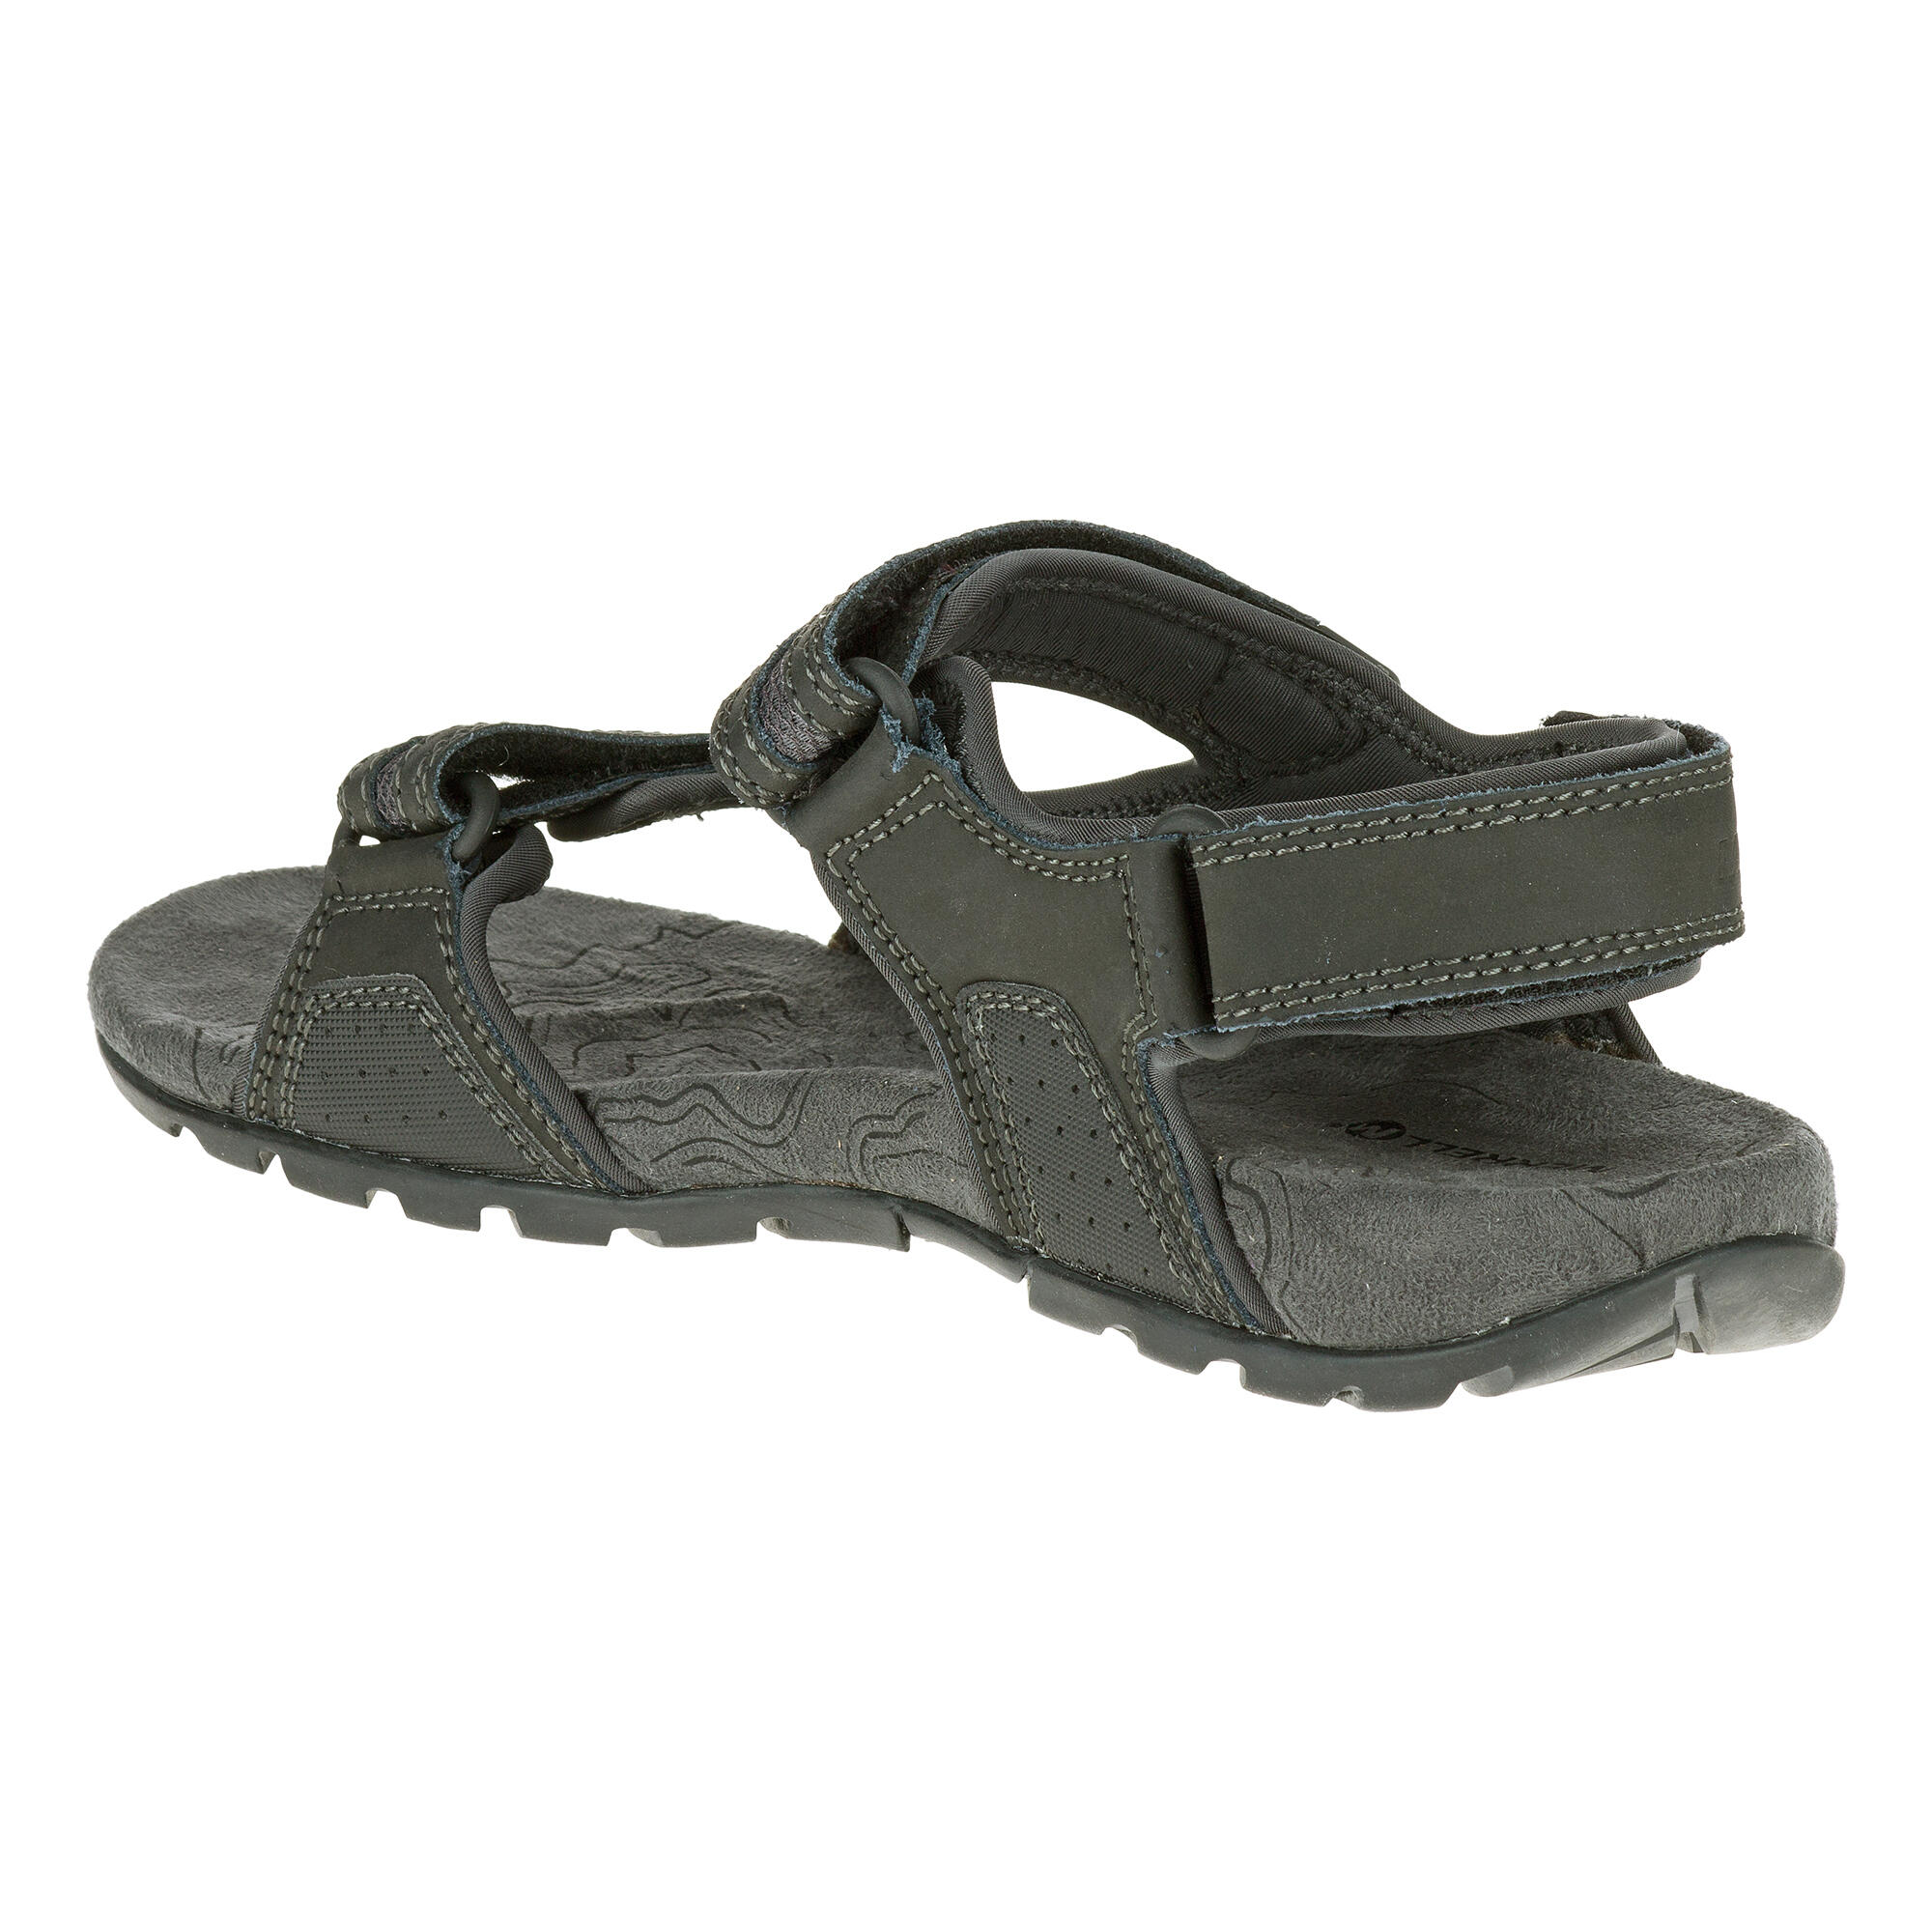 Men's walking sandals - Merrell Sandspur - Black 3/8